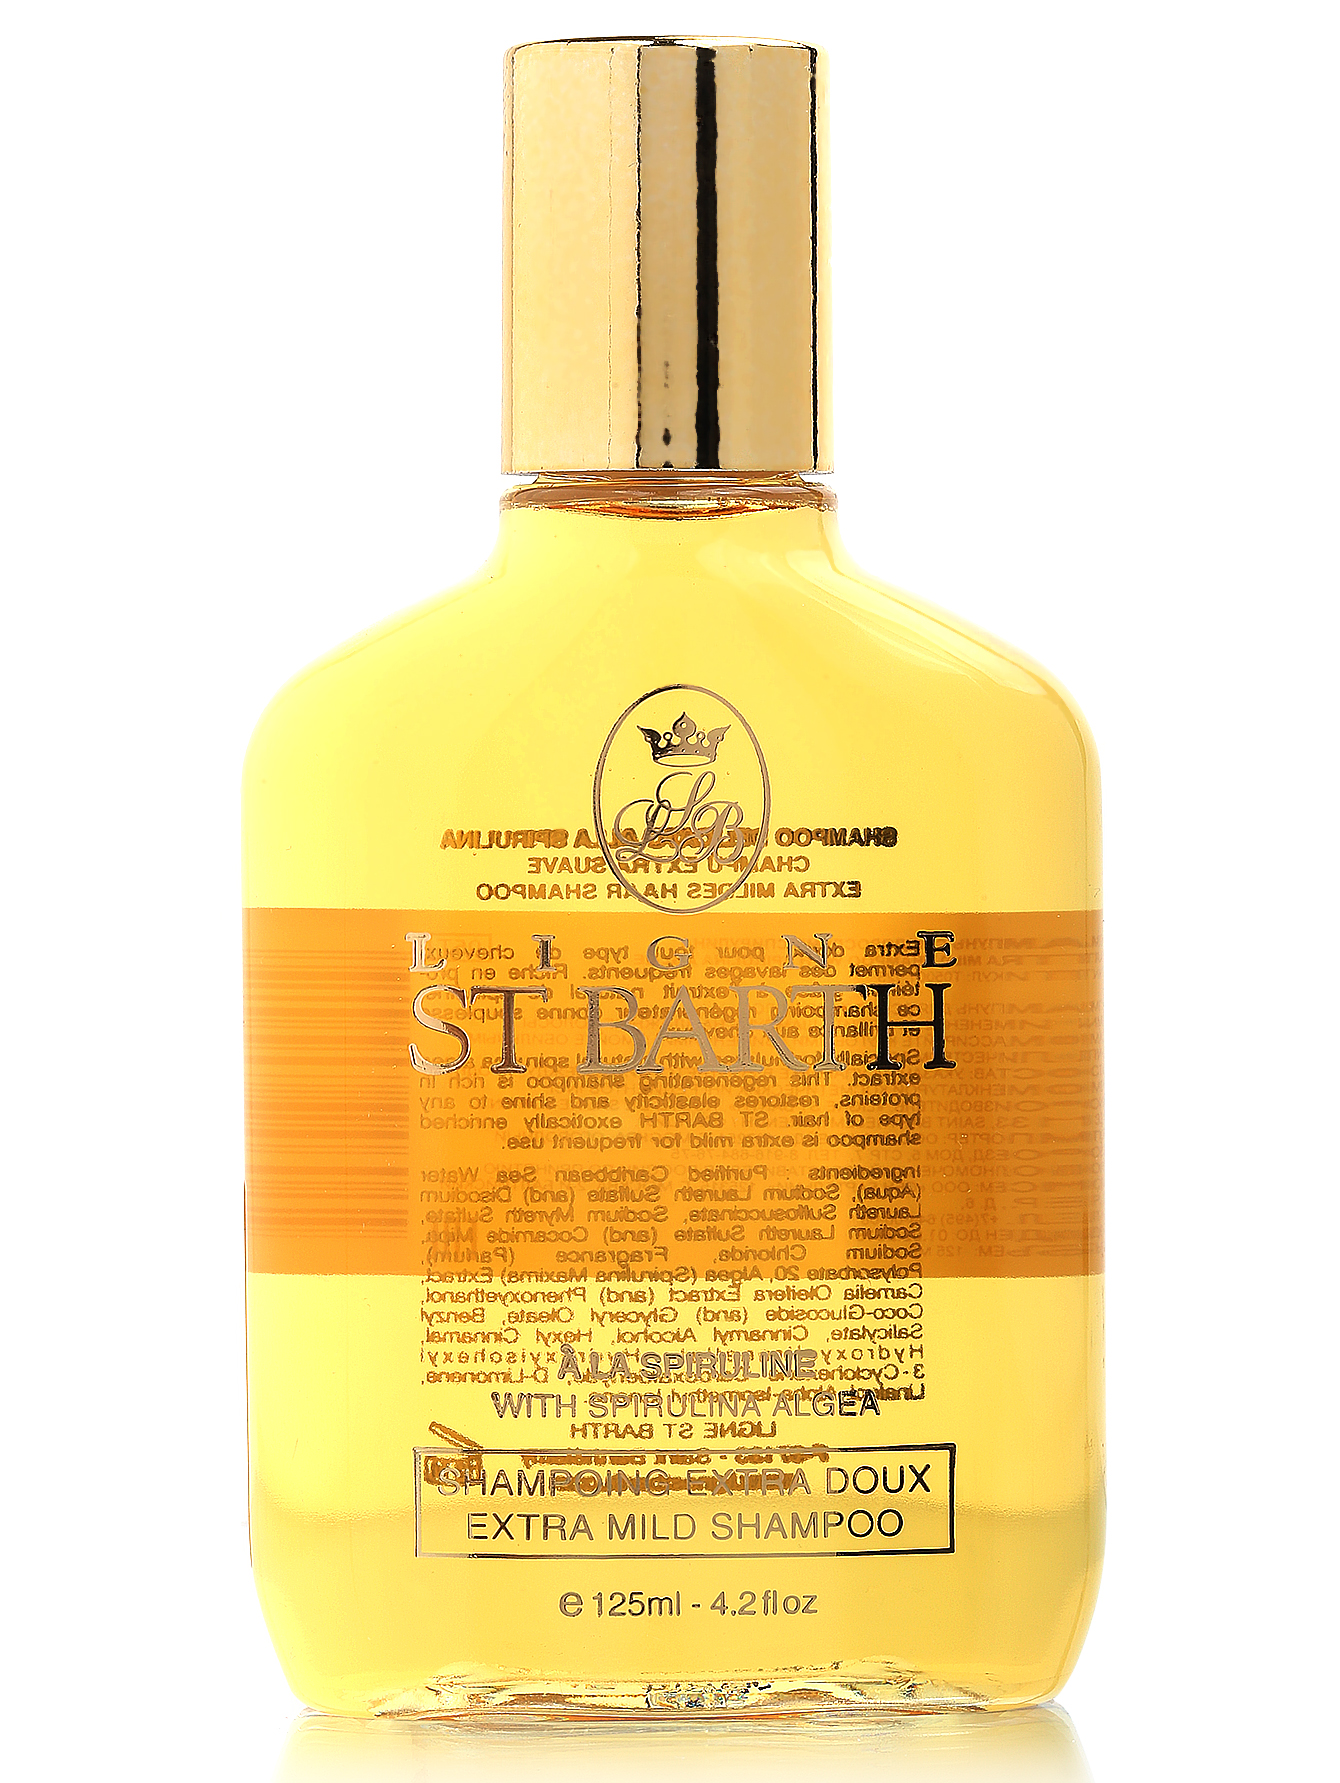  Экстра-мягкий шампунь с водорослями - Hair Care, 125ml - Общий вид